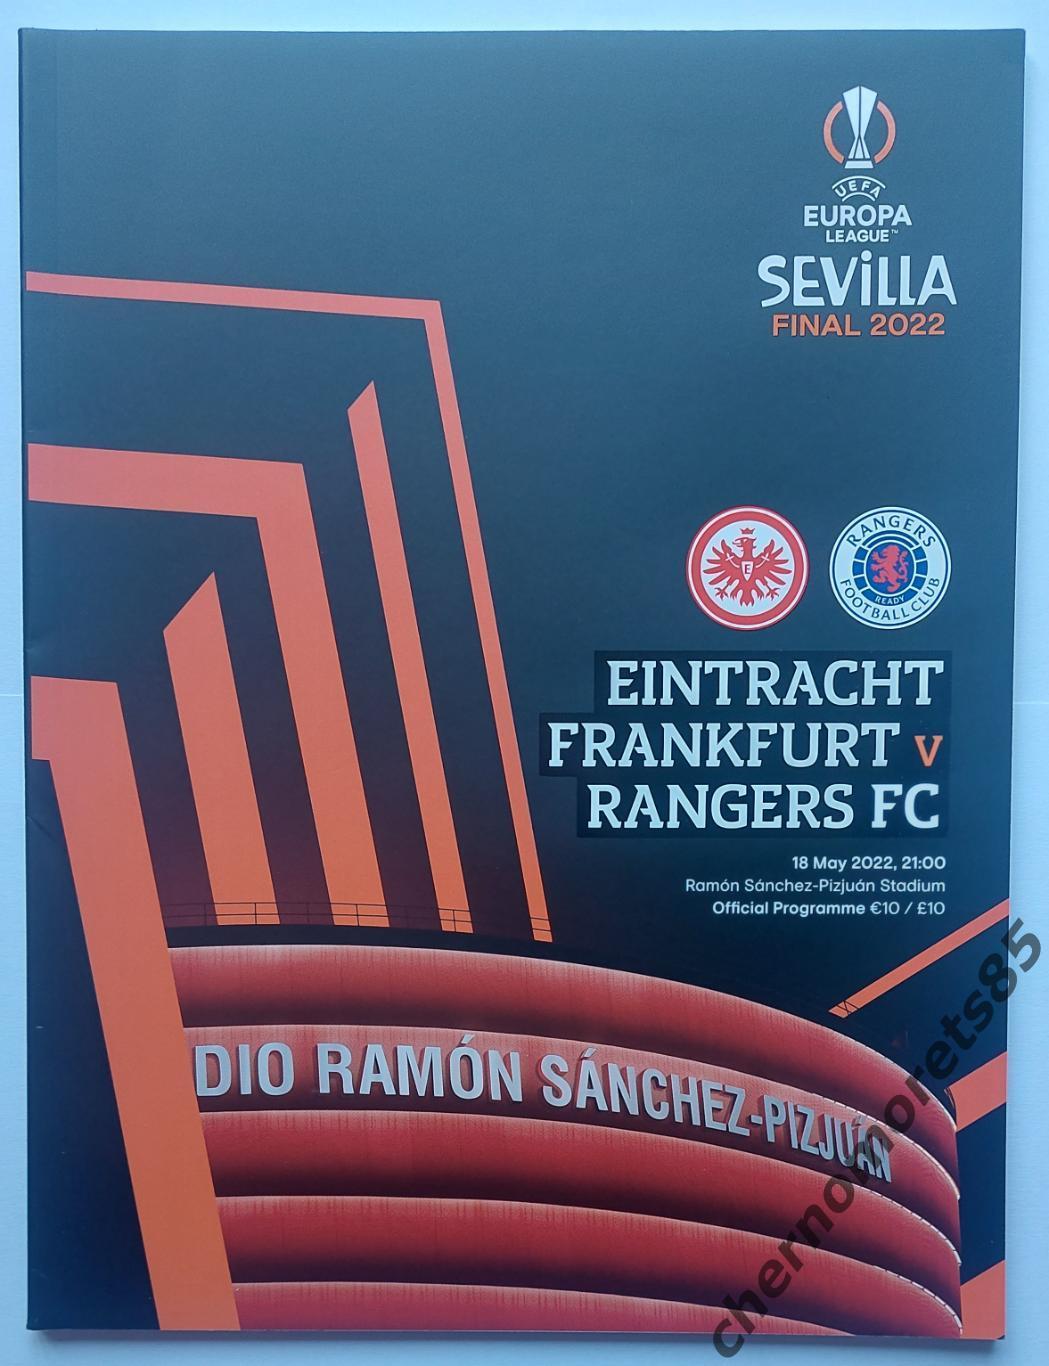 Айнтрахт Франкфурт - Рейнджерс Лига Европы финал 18.5.2022 официальн. программа